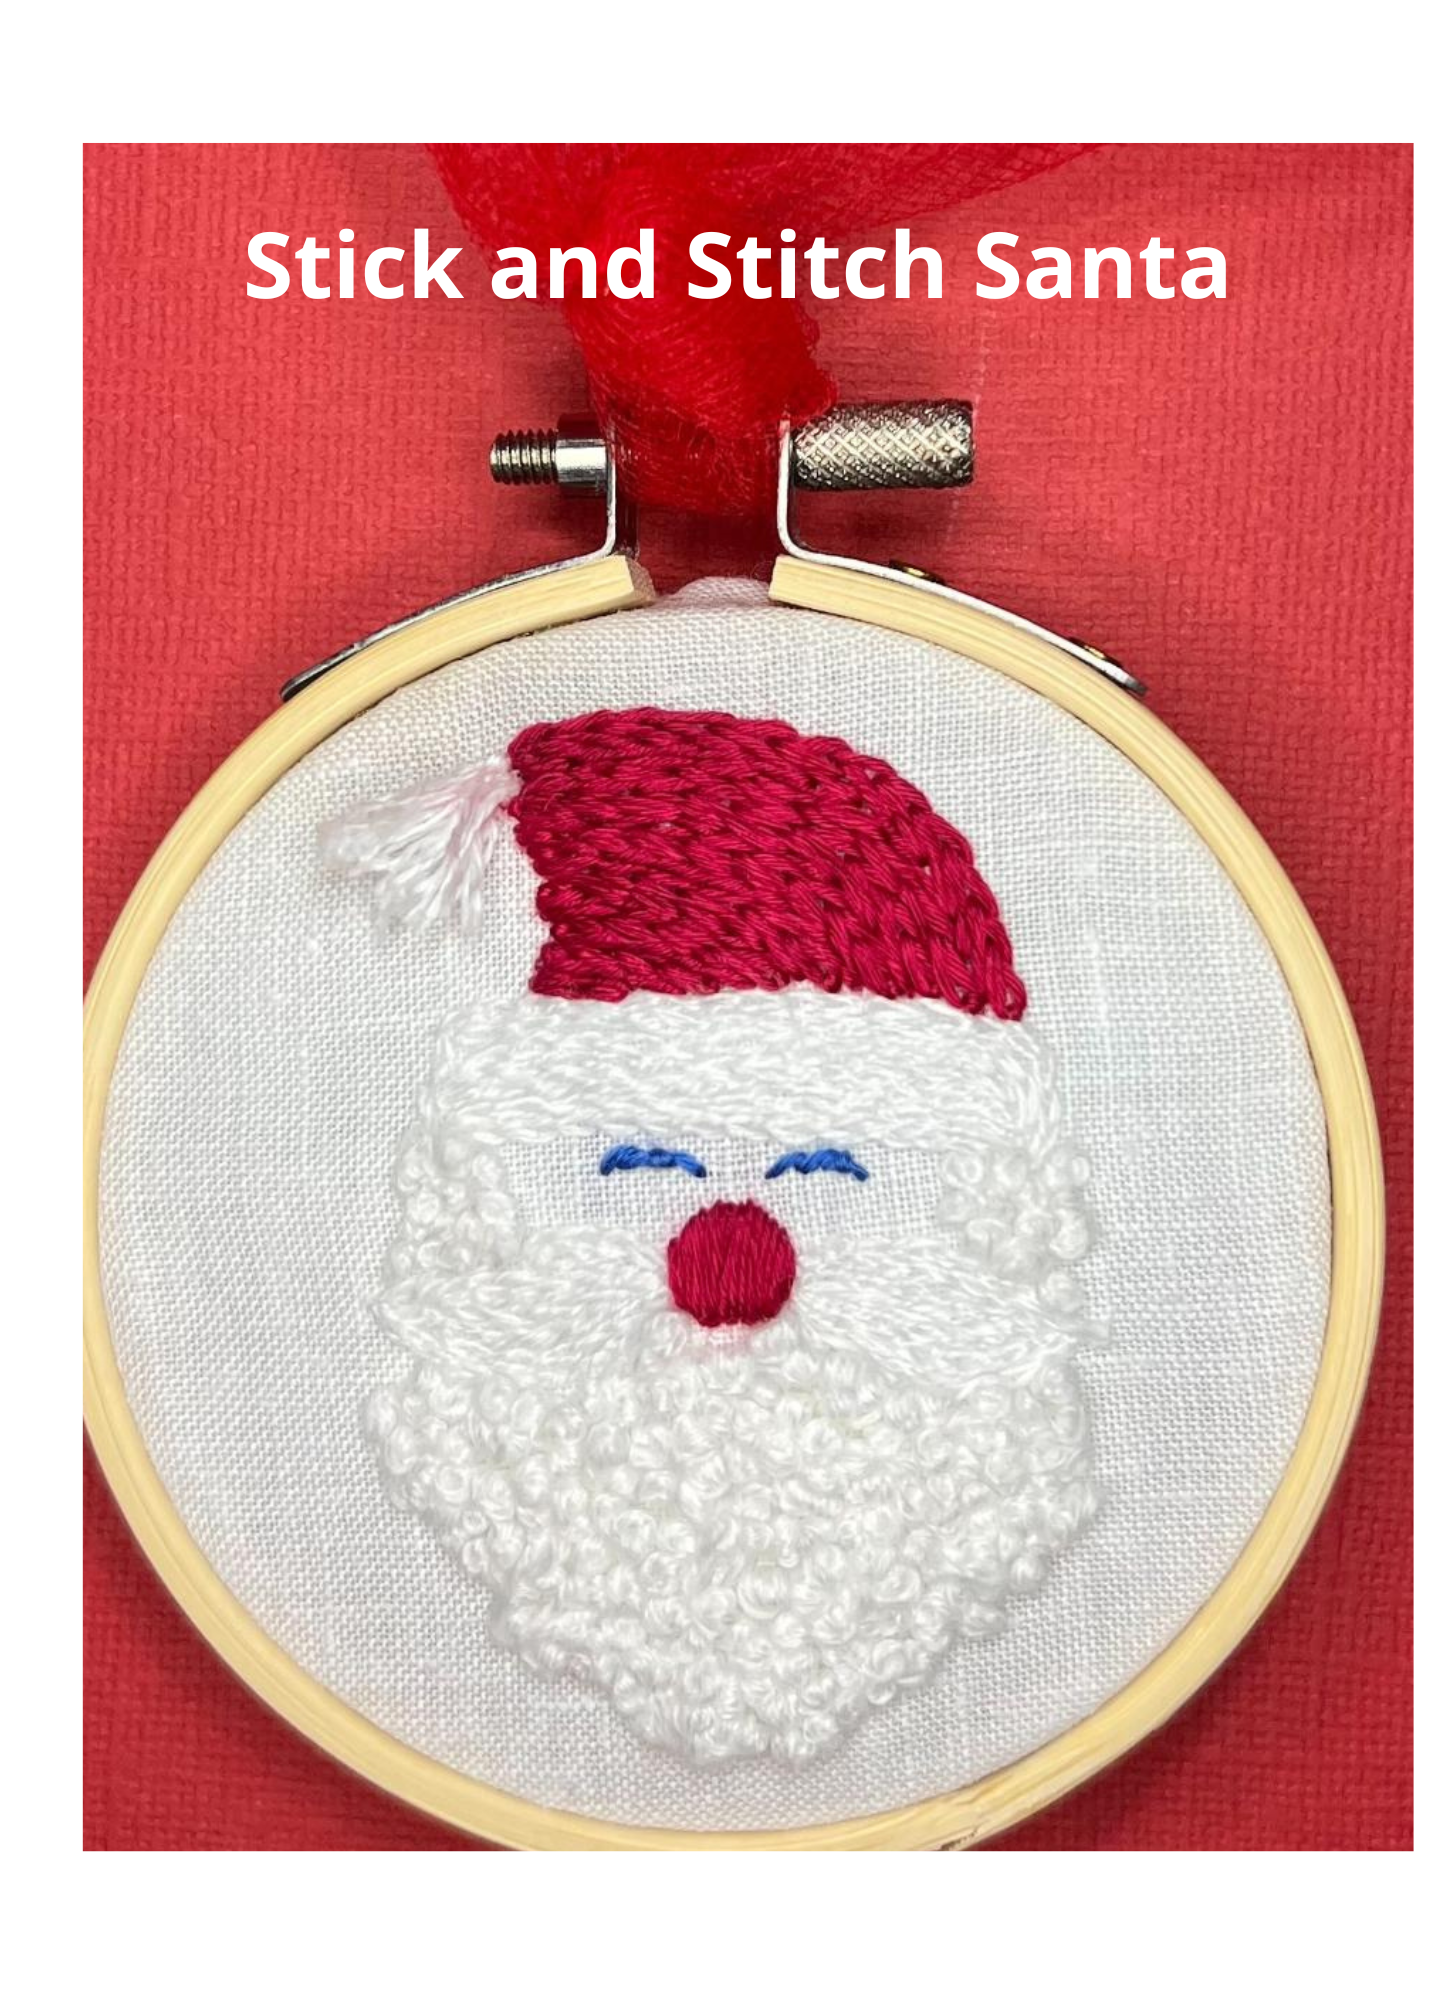 Santa Stick and Stitch